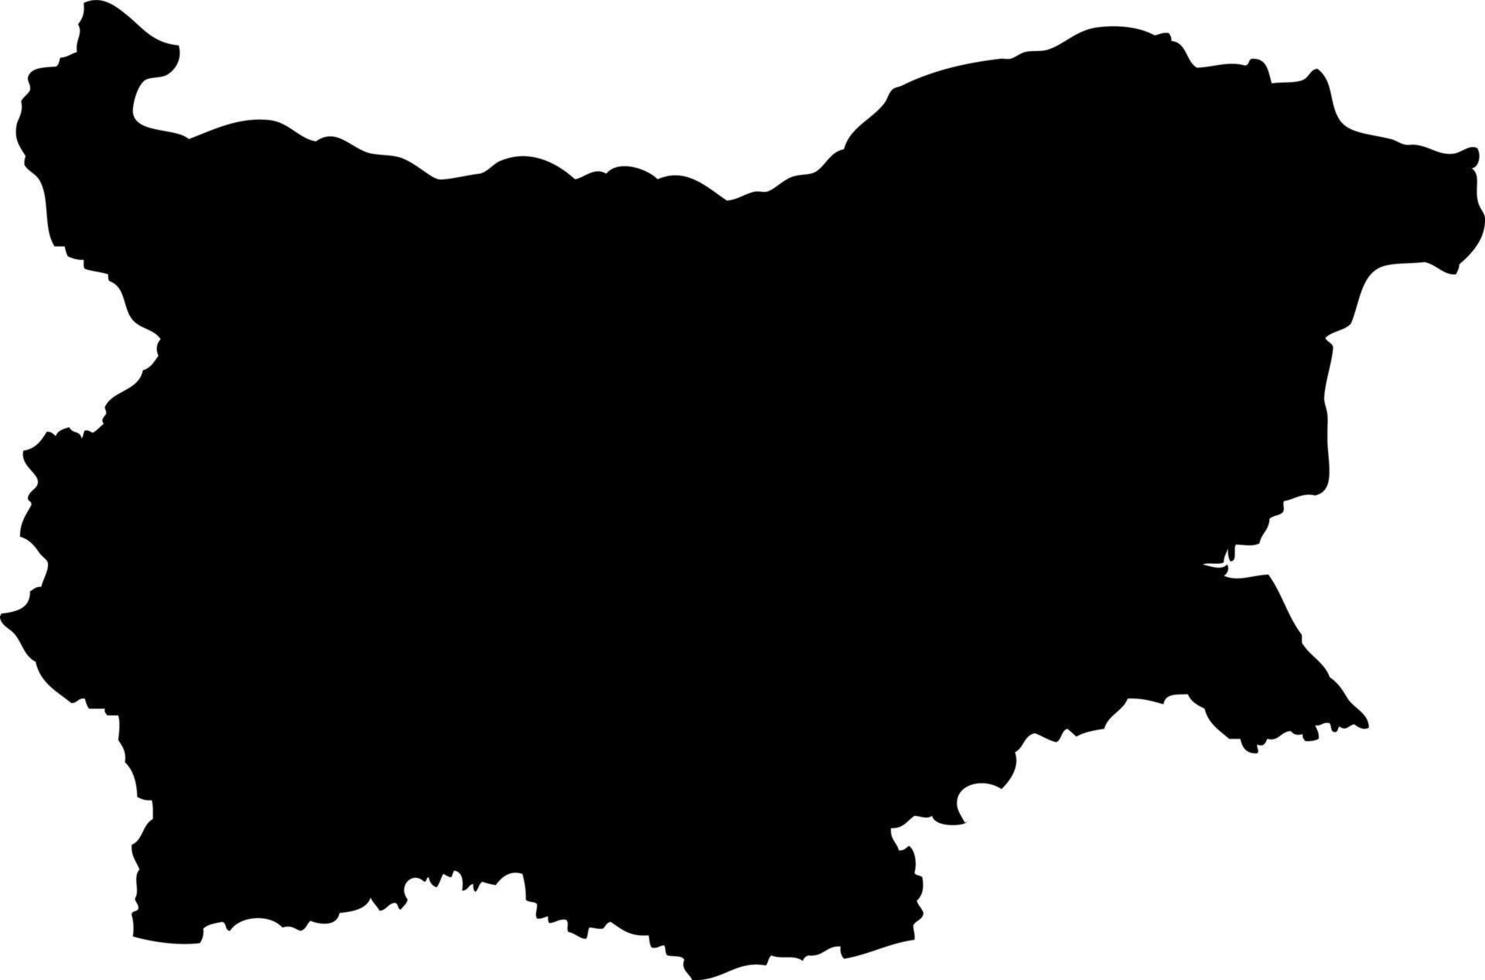 bulgária mapa vector map.hand desenhado estilo de minimalismo.